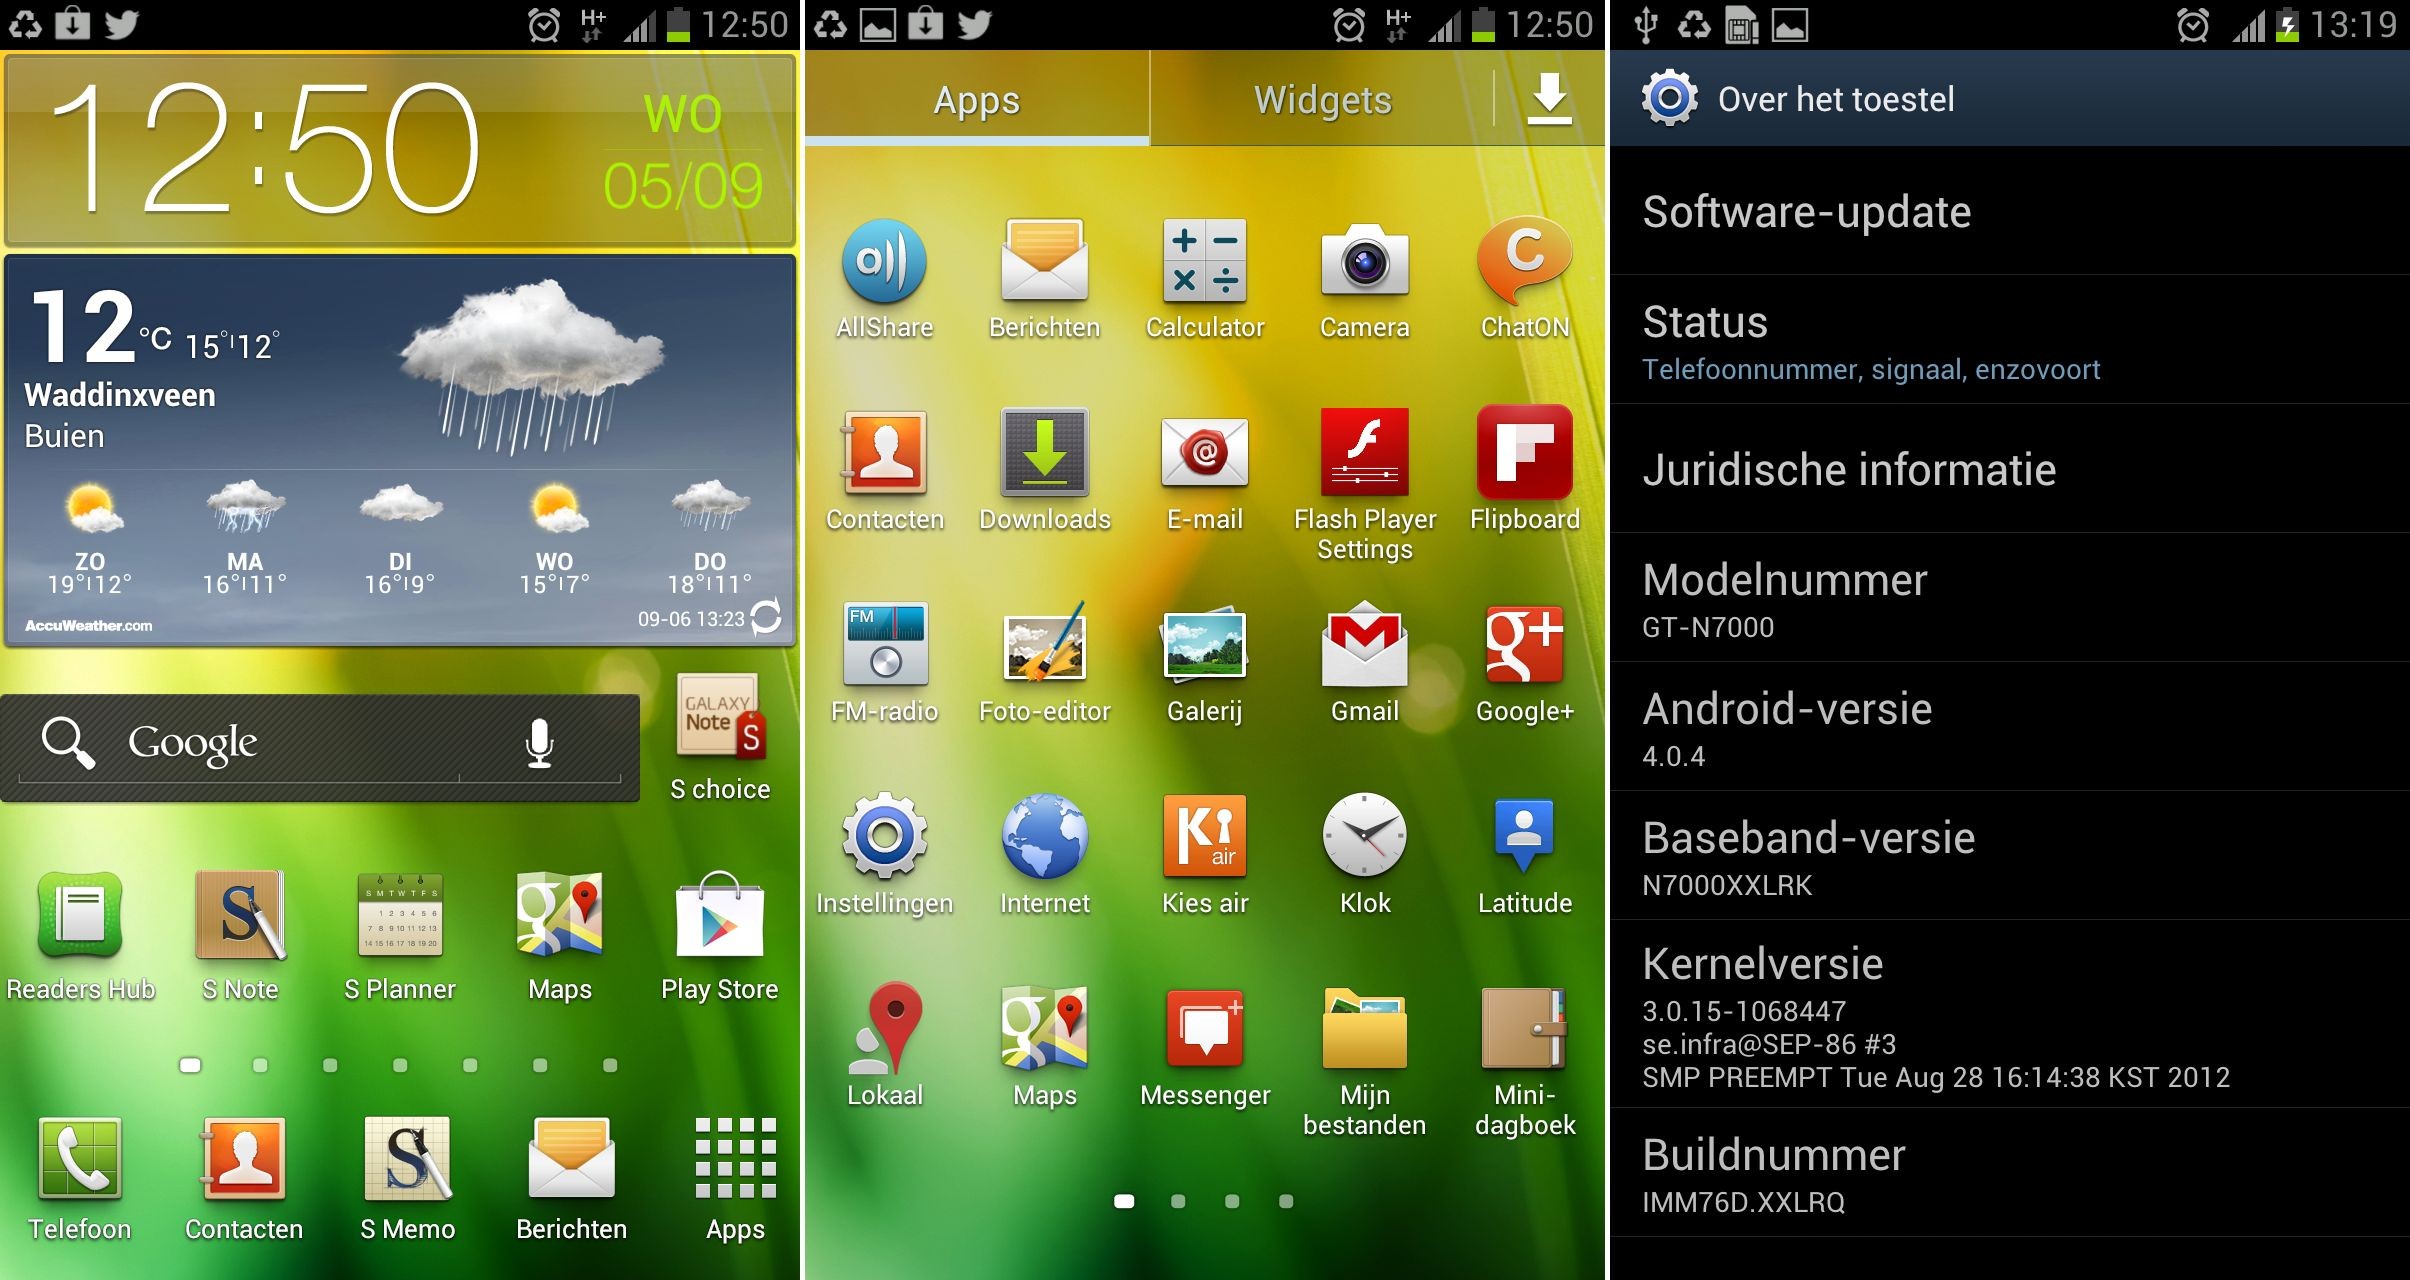 Apk андроид 0. Андроид. Андроид 4.0. Операционная система Android. Версия андроид 4.4.